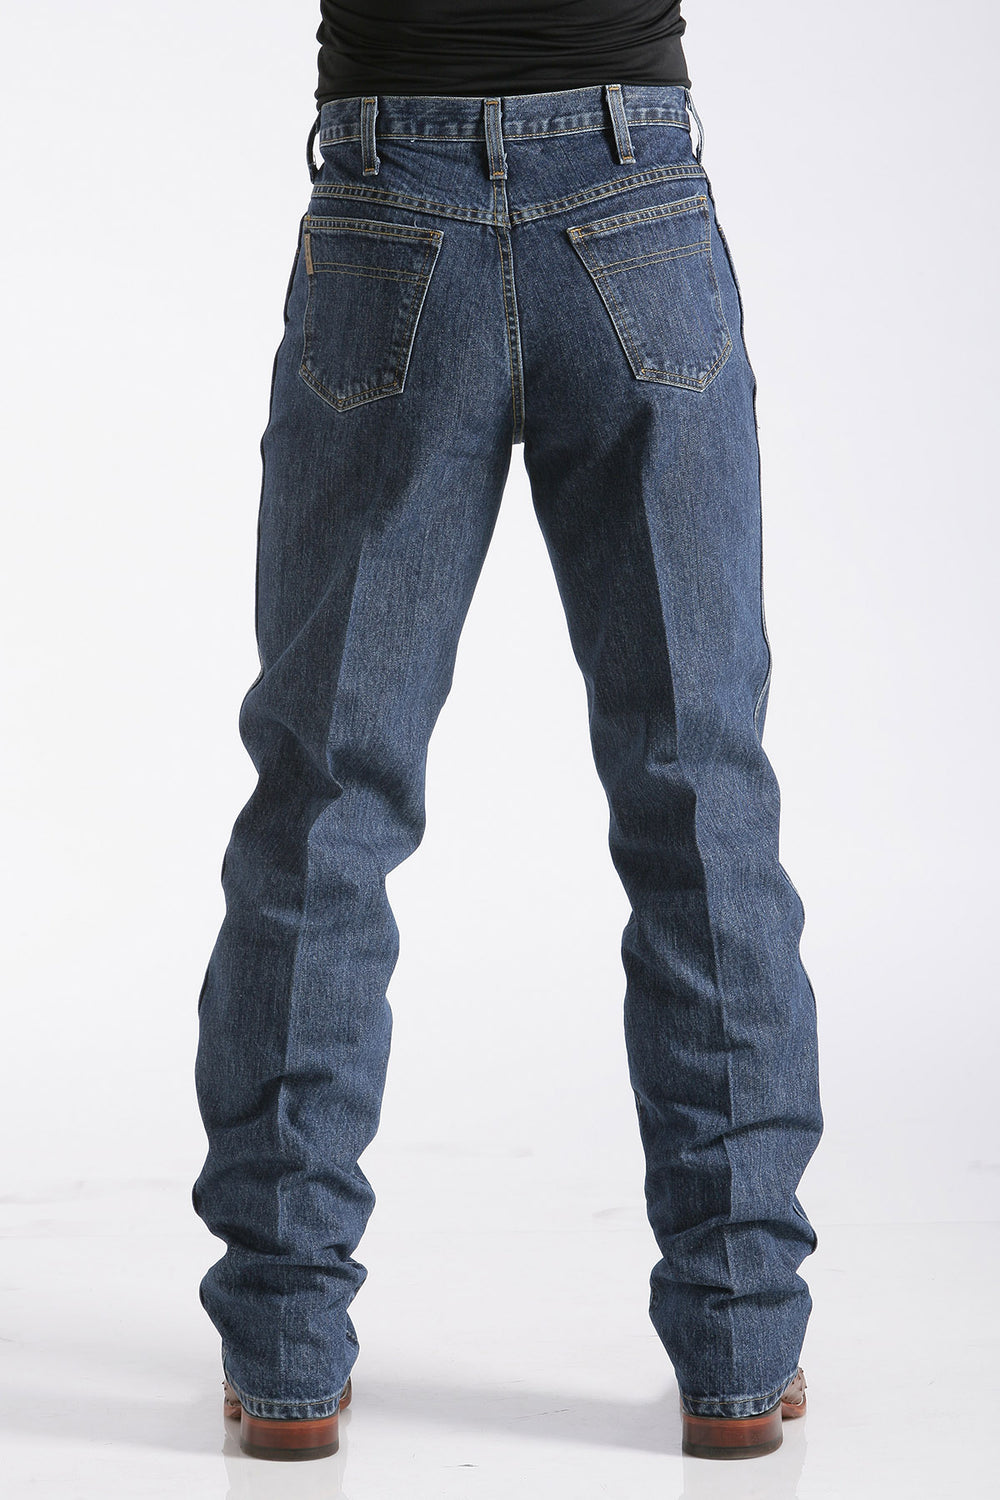 Men's Cinch Jeans, Black Label 2.0, Medium Wash